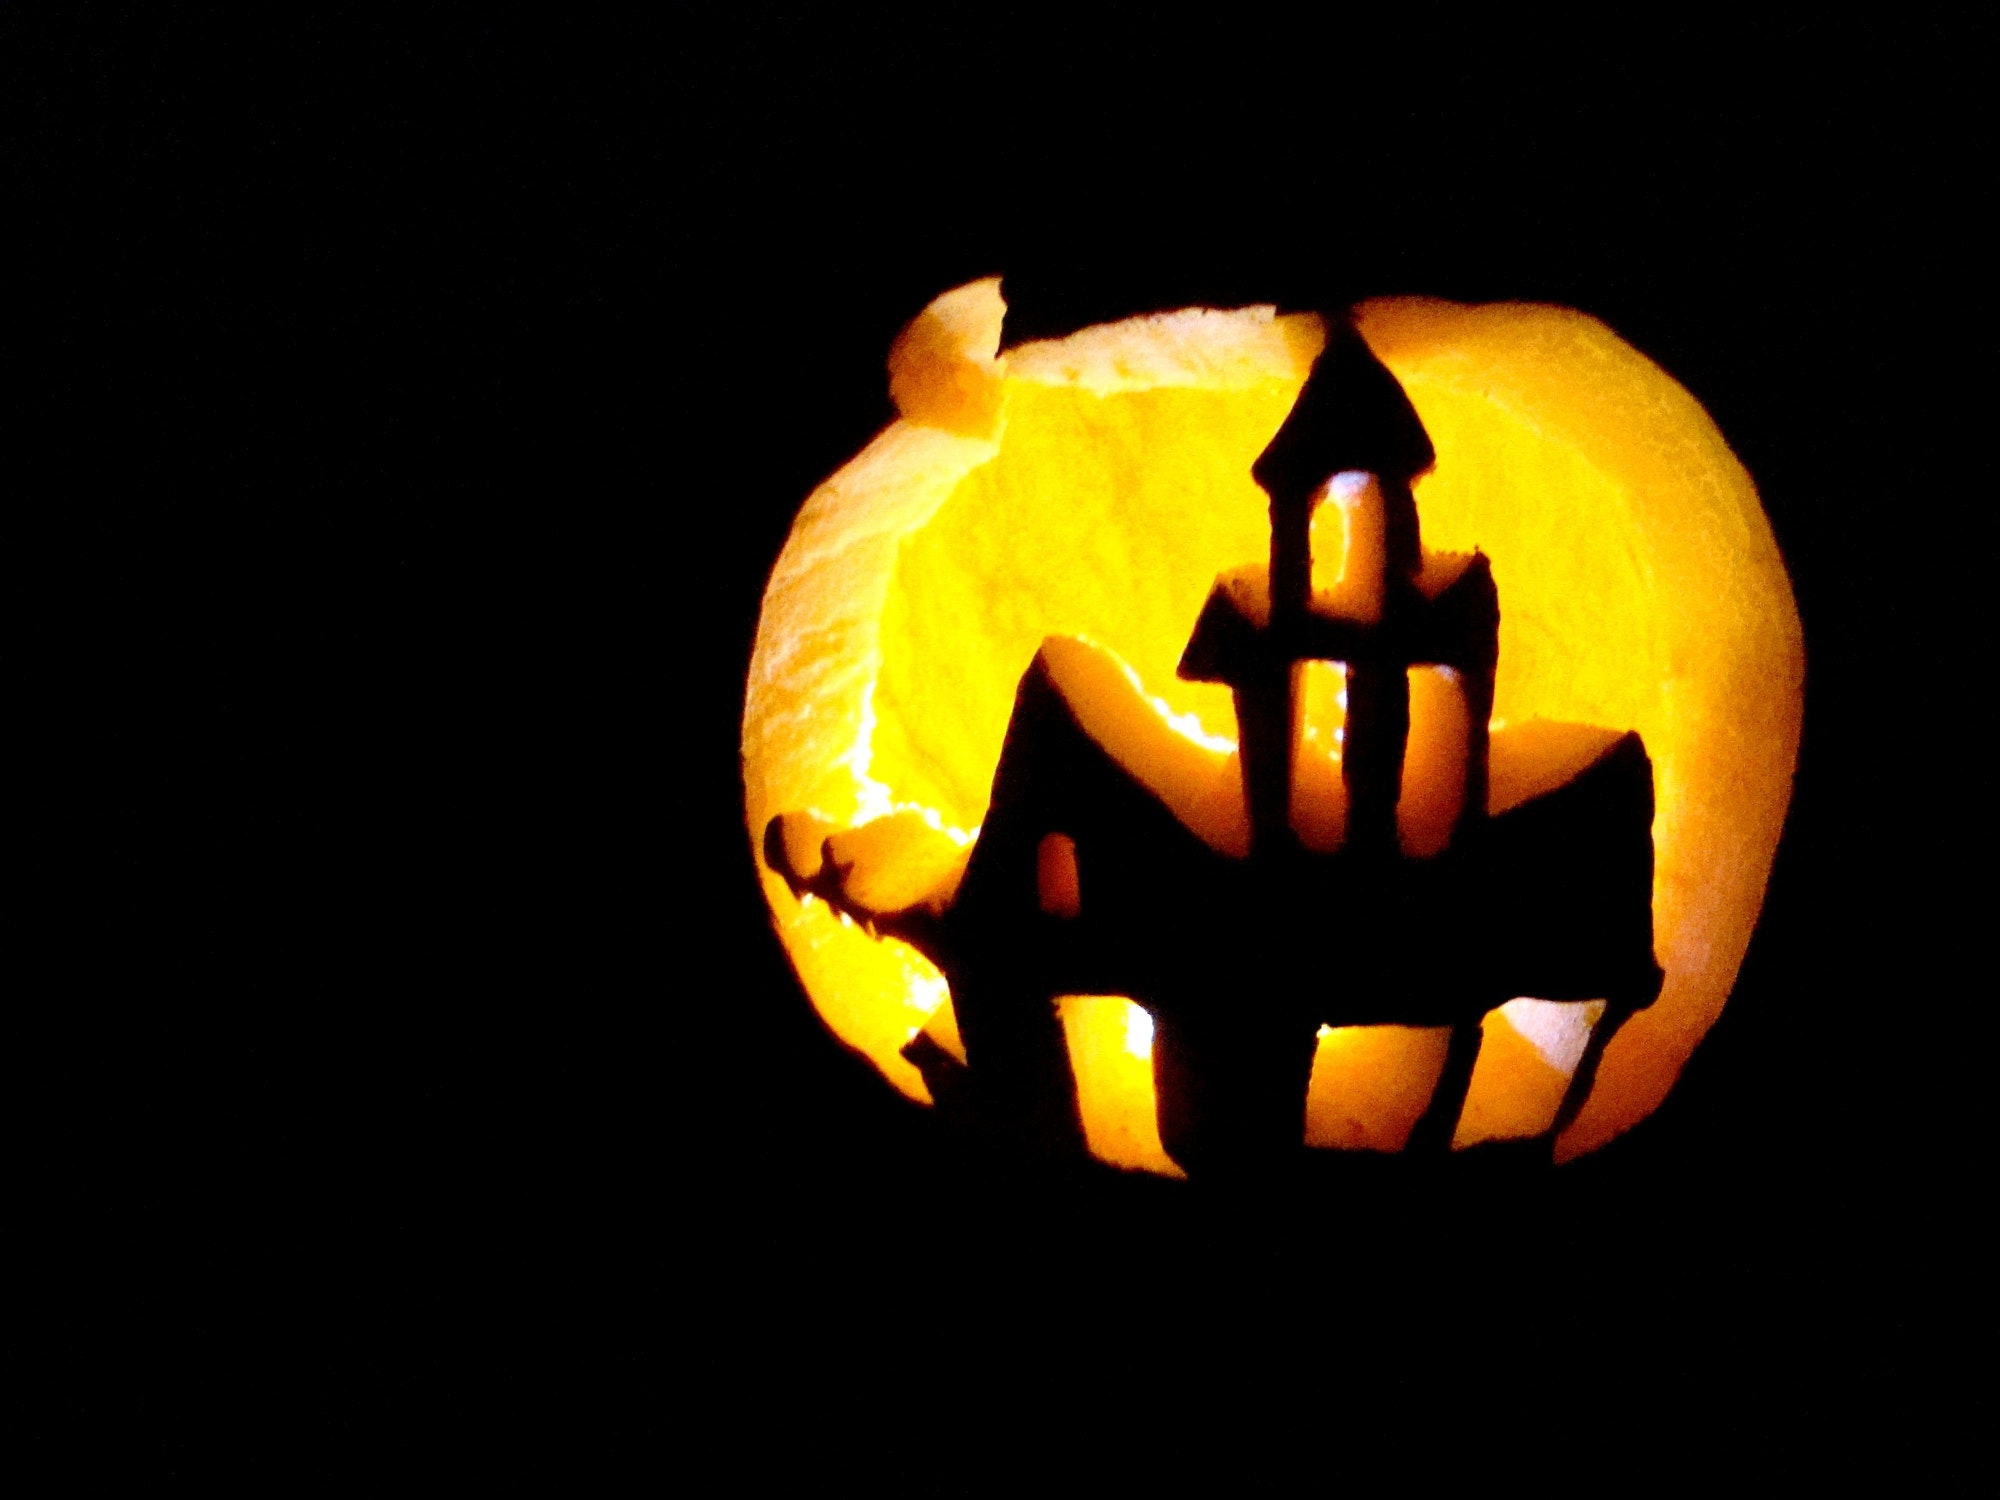 A haunted house cutout in a jack-o-lantern pumpkin for Halloween.